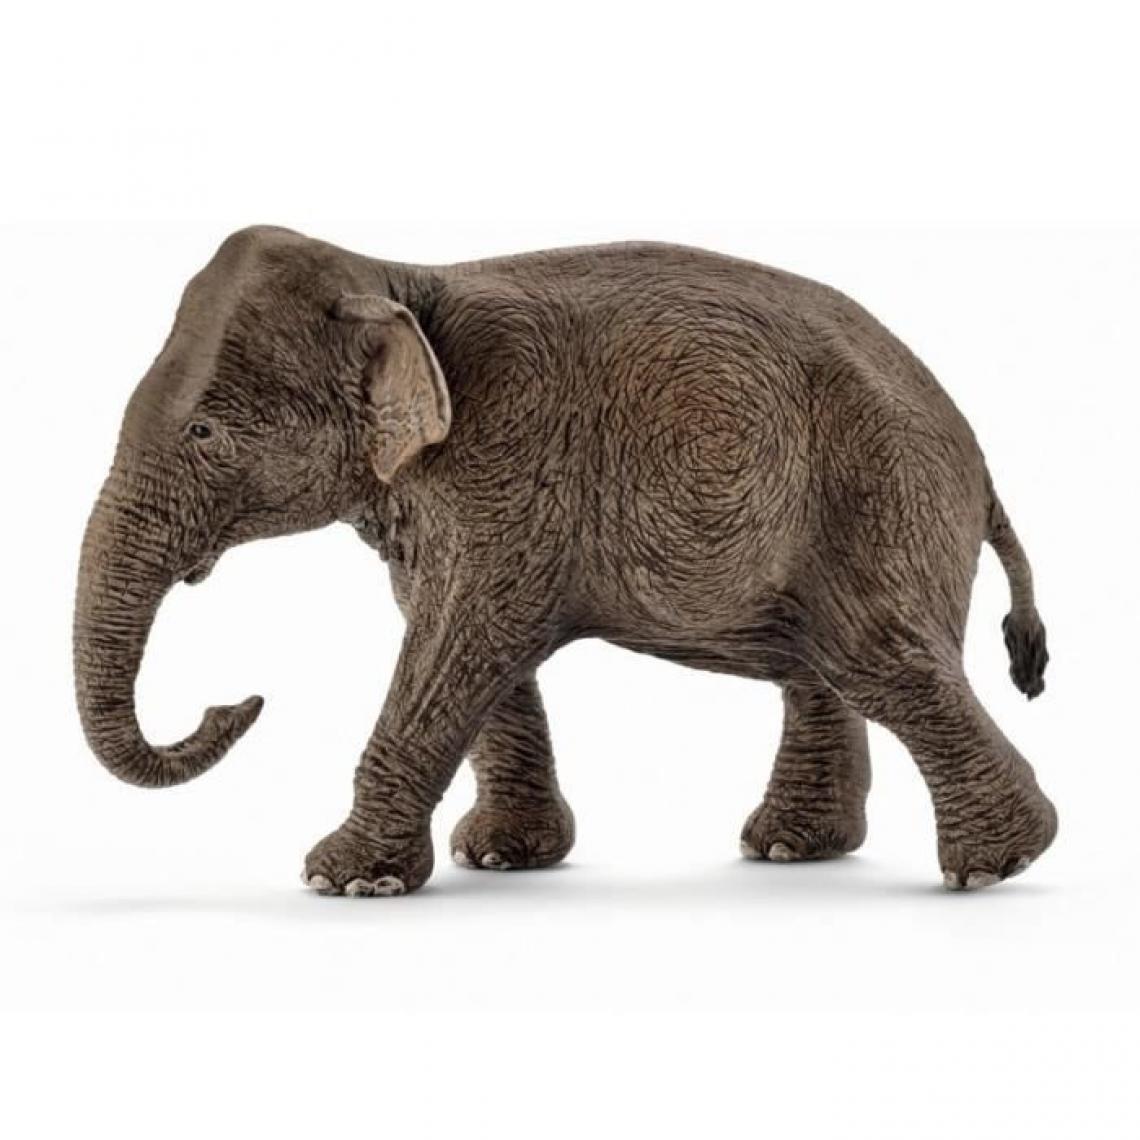 Schleich - Schleich Figurine 14753 - Animal de la savane - Eléphant d'Asie, femelle - Films et séries